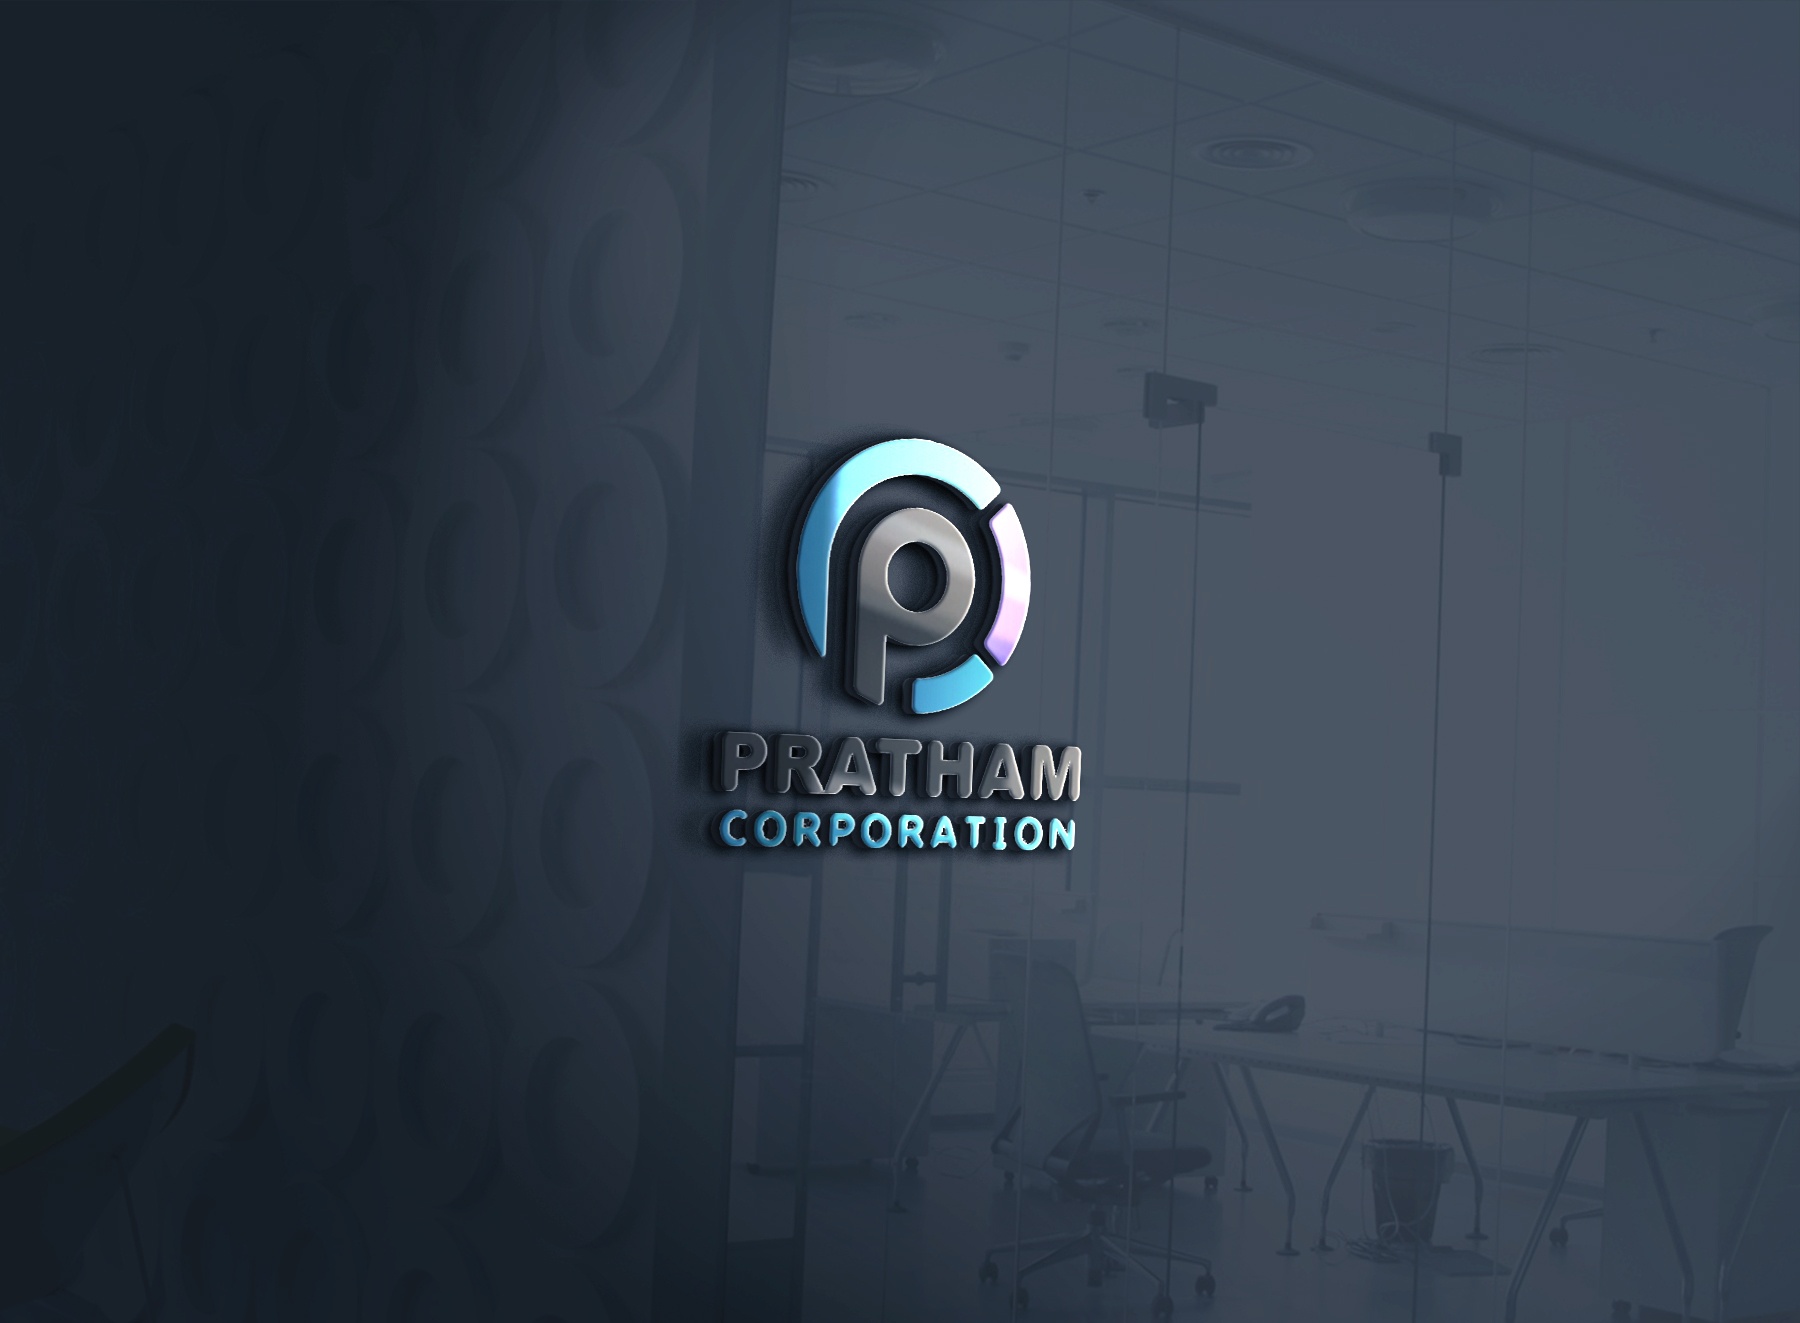 Custom Code Work and Service - Pratham Corporation